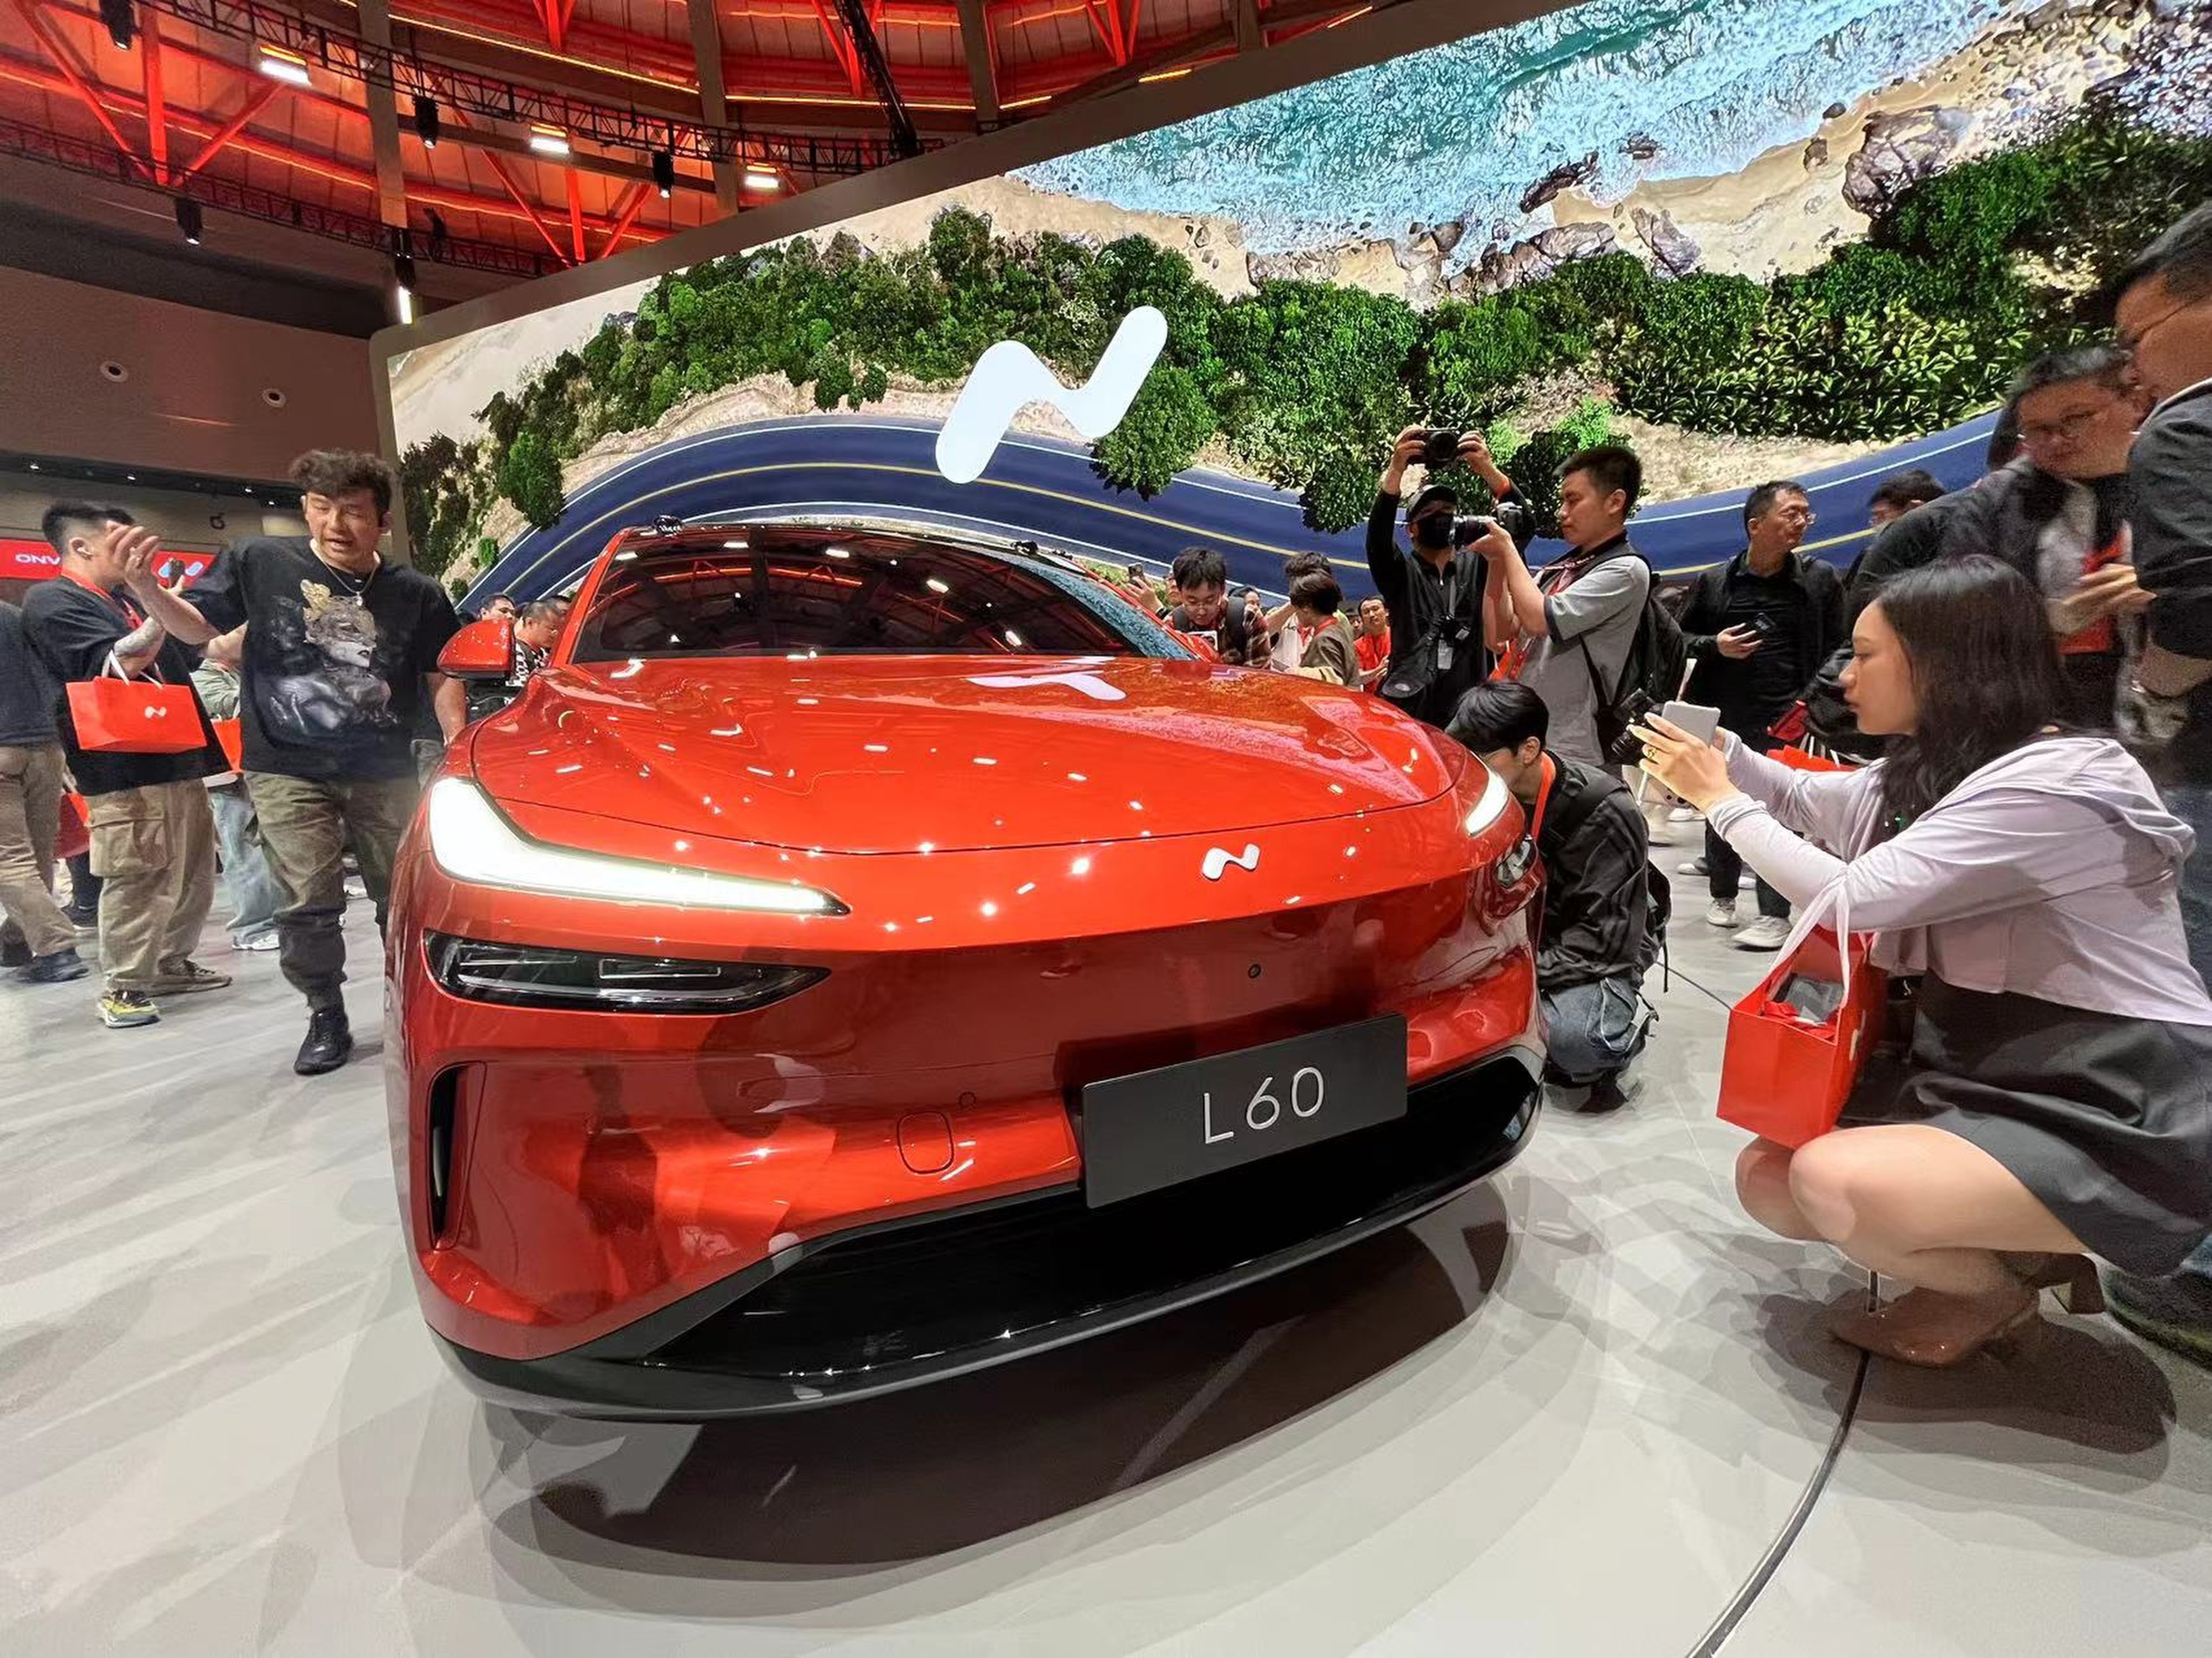 Nio unveiled the Onvo L60 SUV in Shanghai on Wednesday. Photo: Daniel Ren